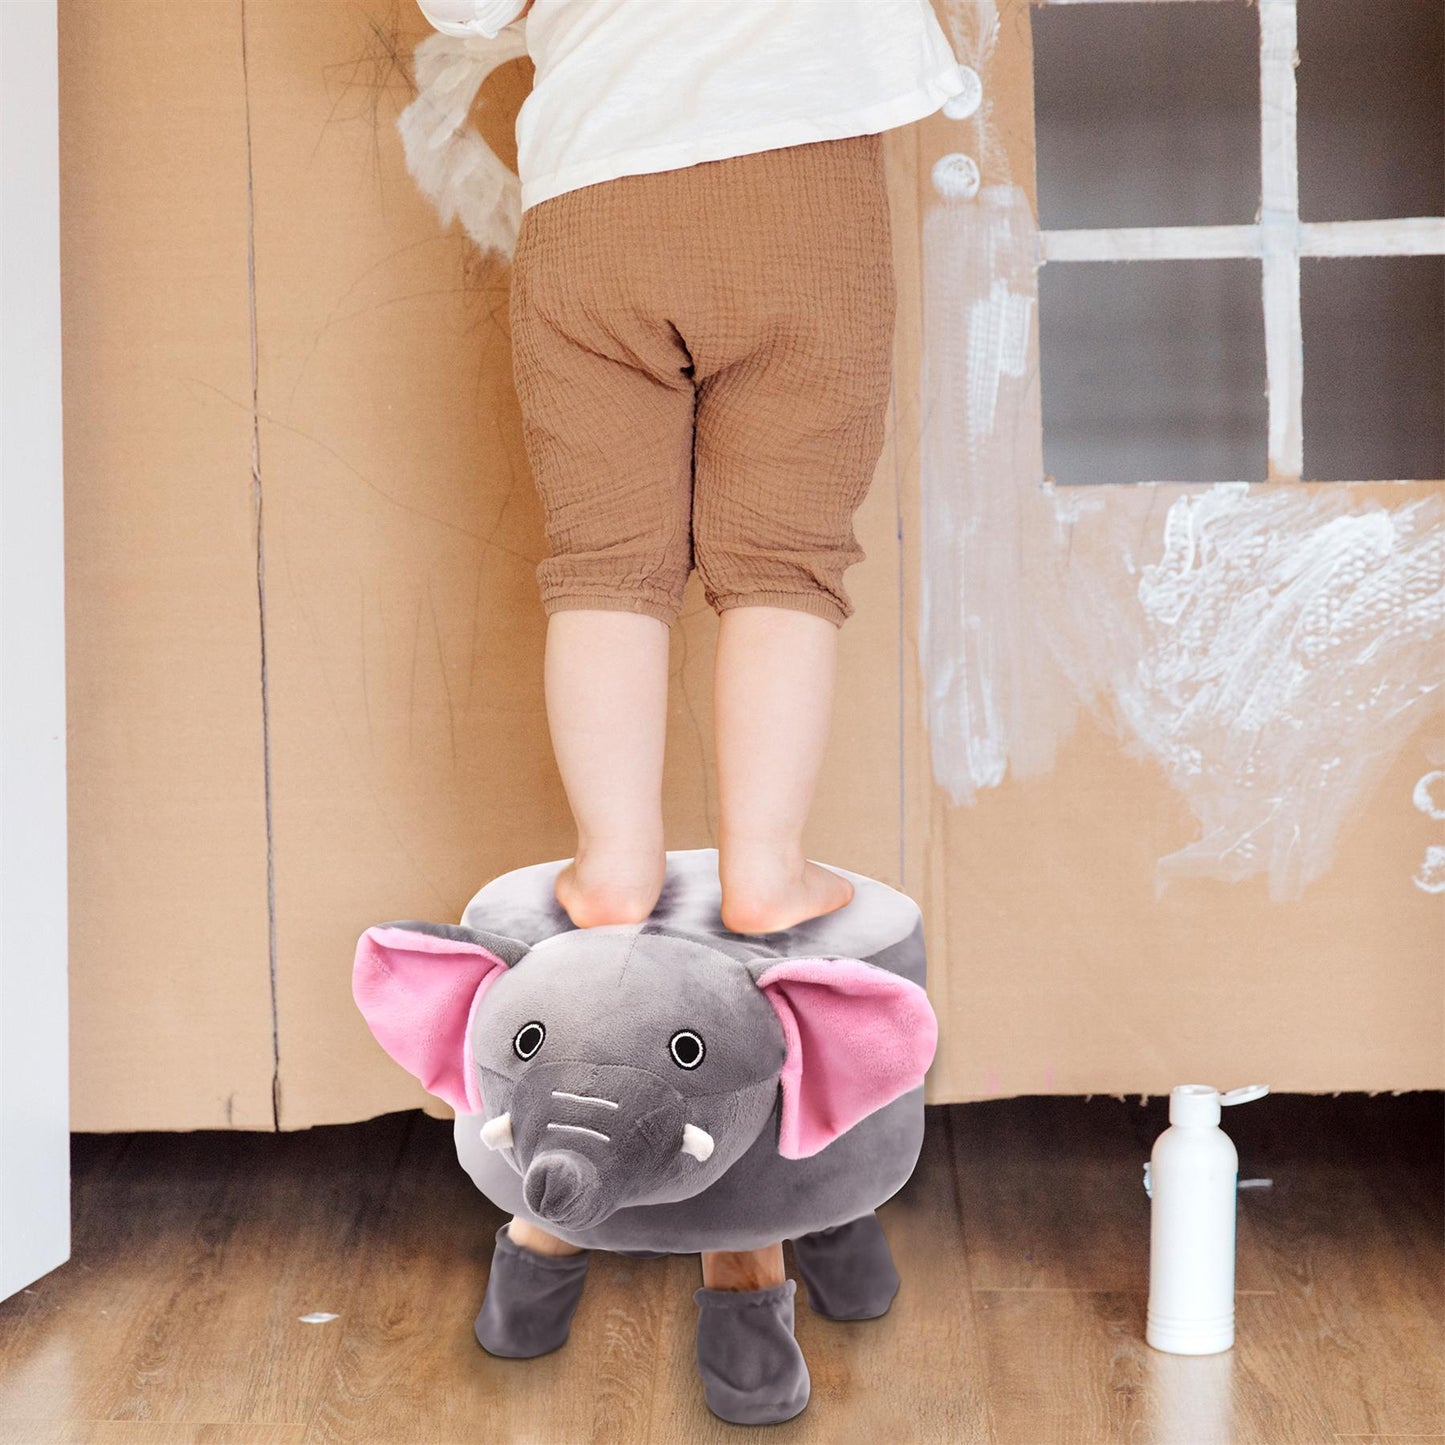 Kids Round Wooden Elephant Stool by The Magic Toy Shop - UKBuyZone